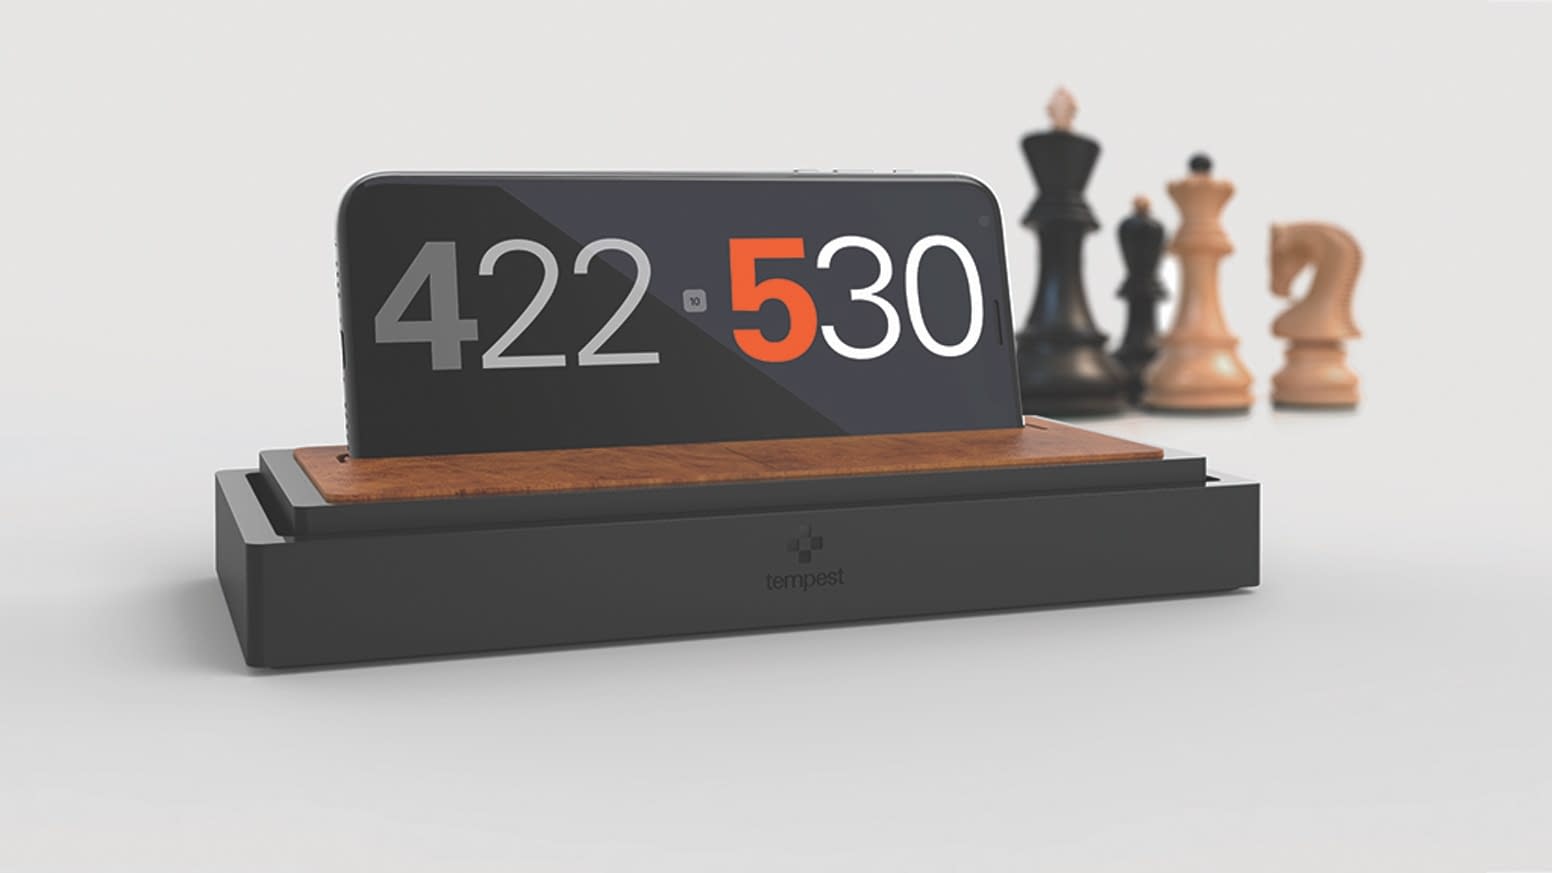 CE Classic chess clock